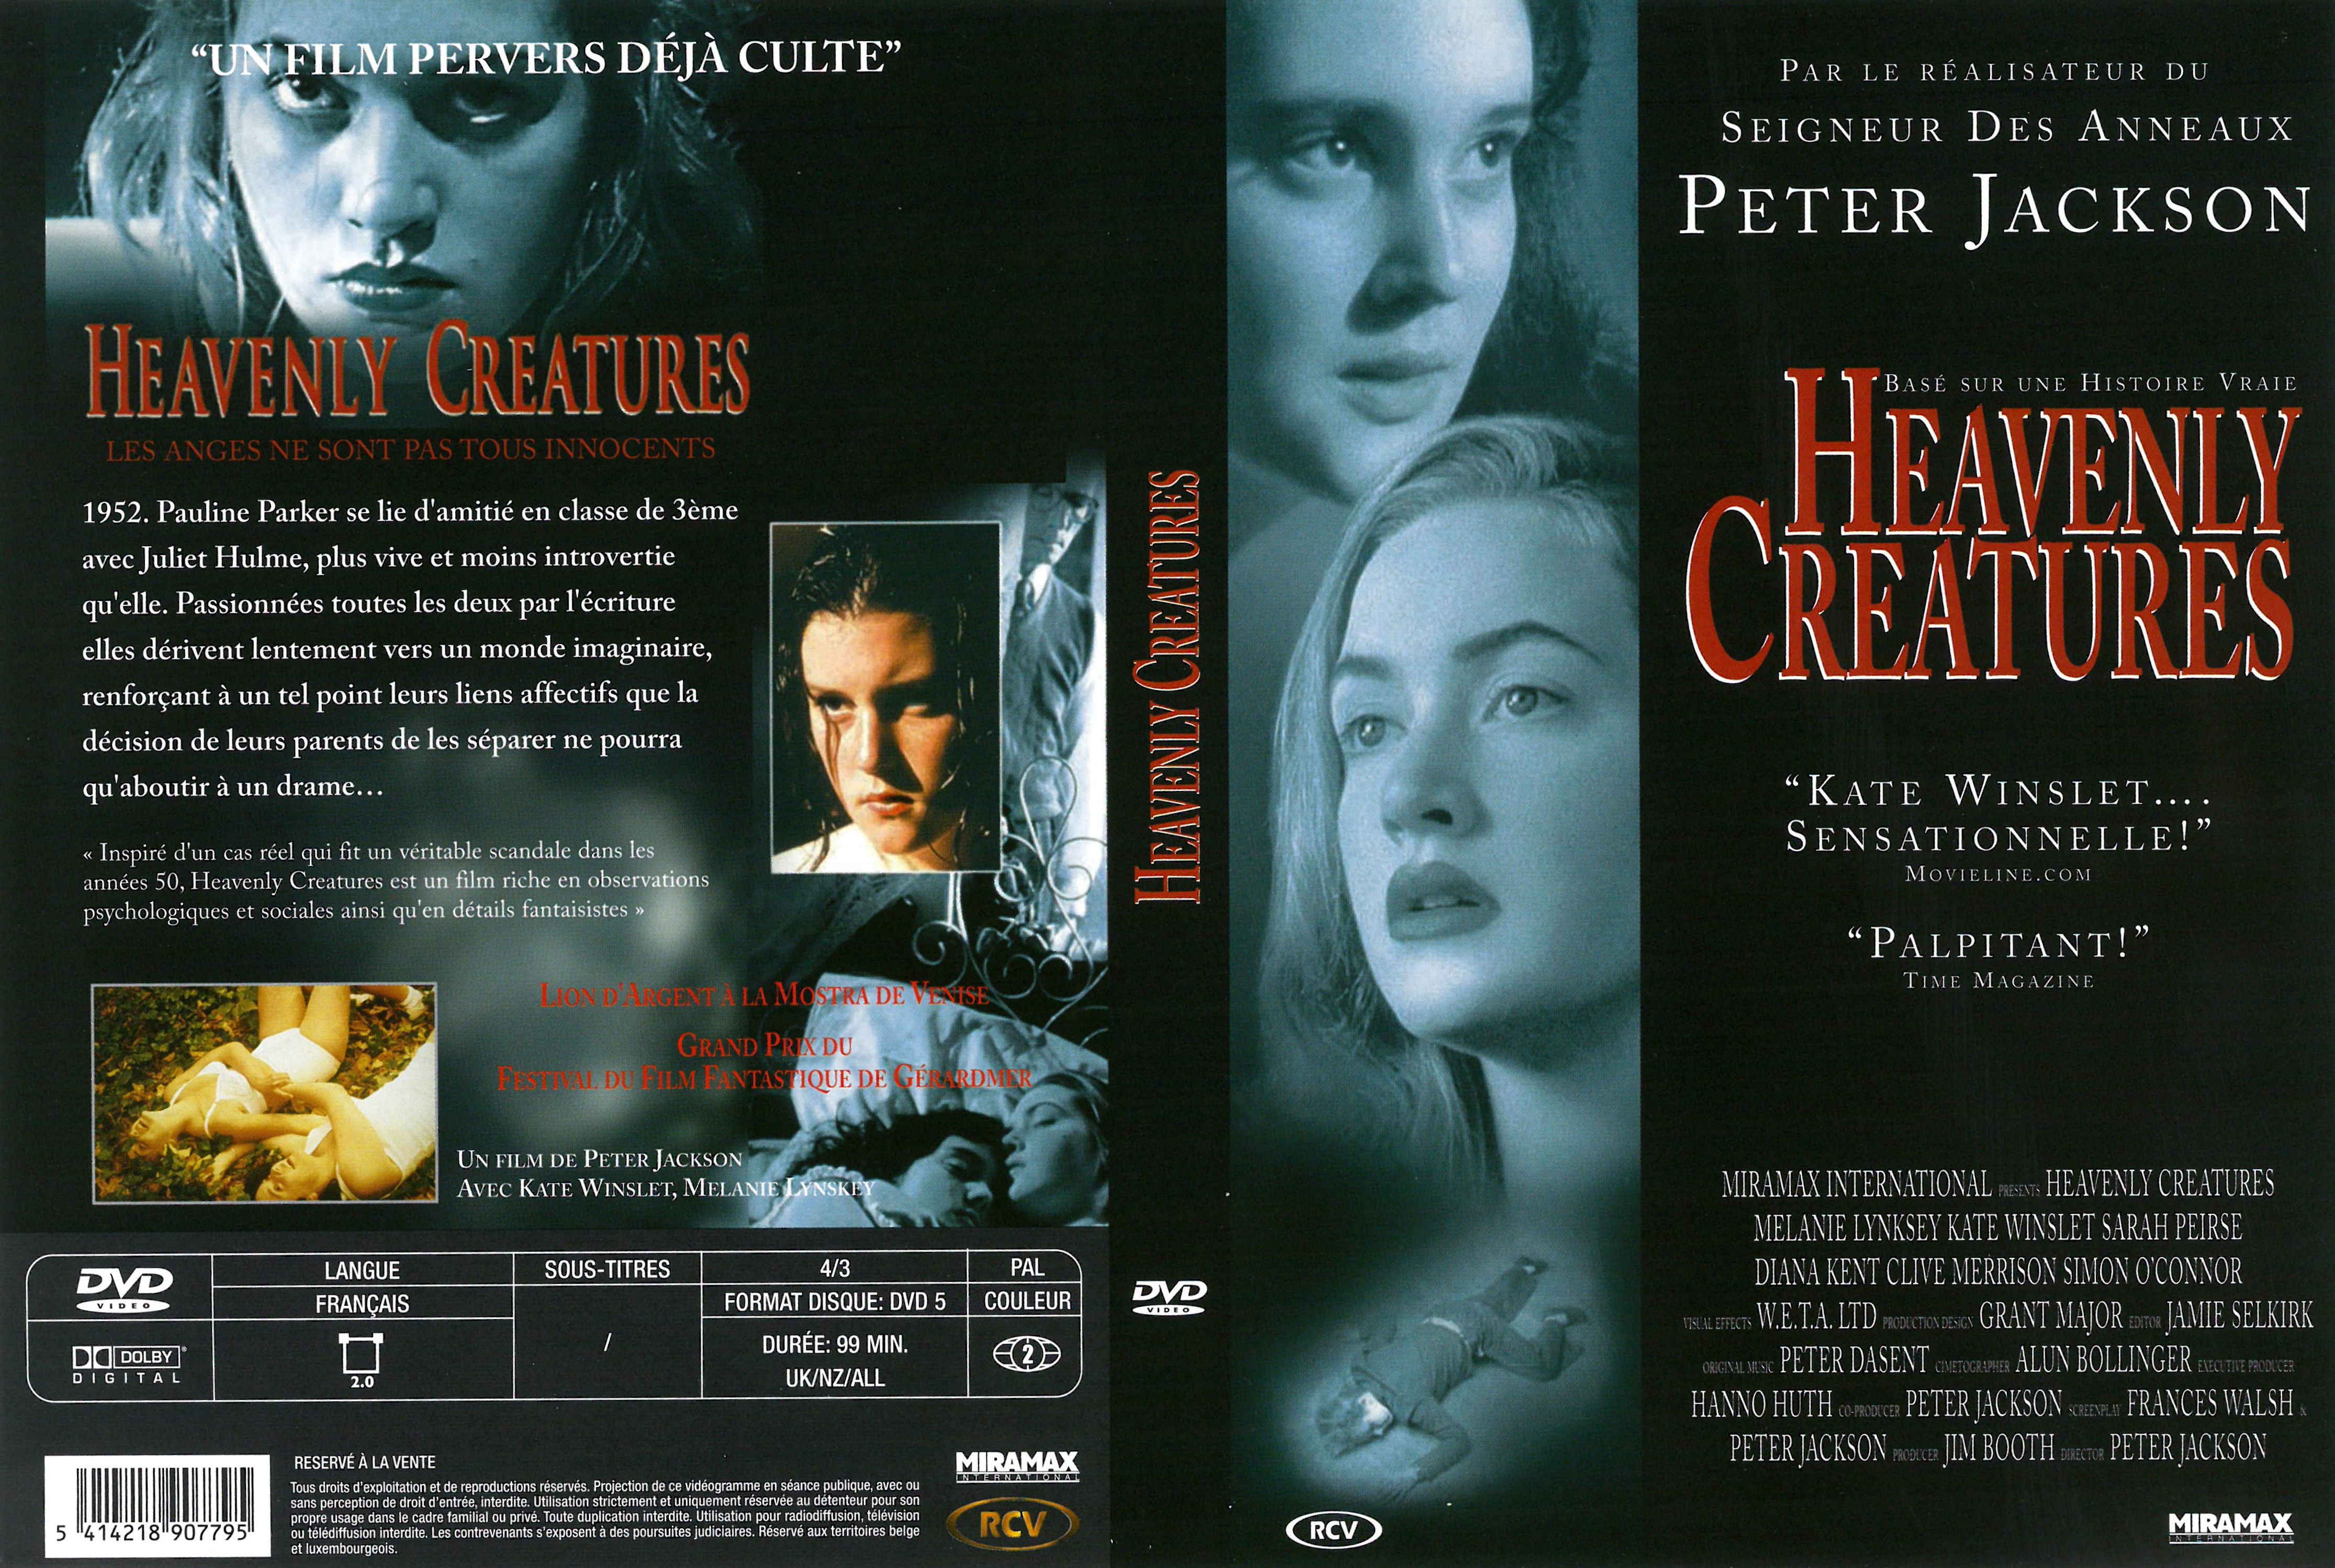 Jaquette DVD Heavenly creatures - Cratures clestes v2